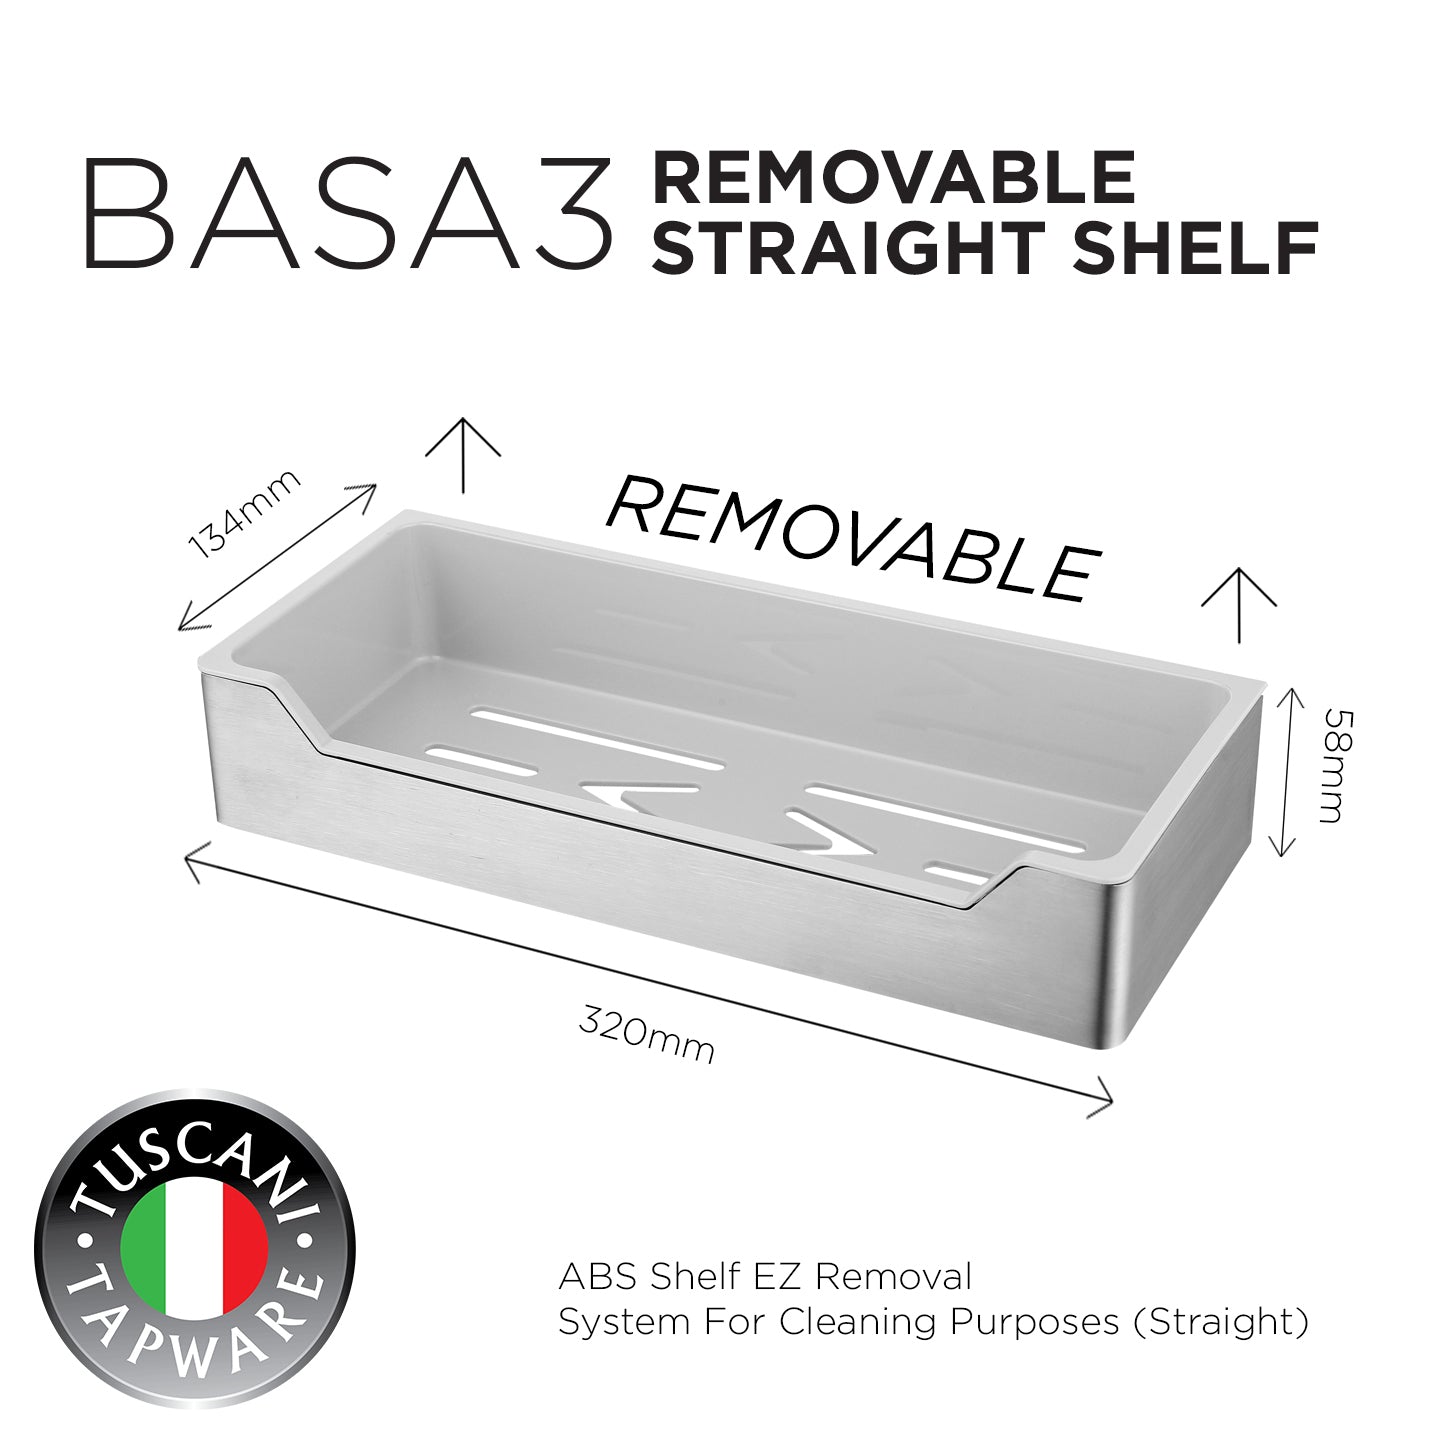 BASA3 - Removable Straight Shelf Series - Bathroom Accessories